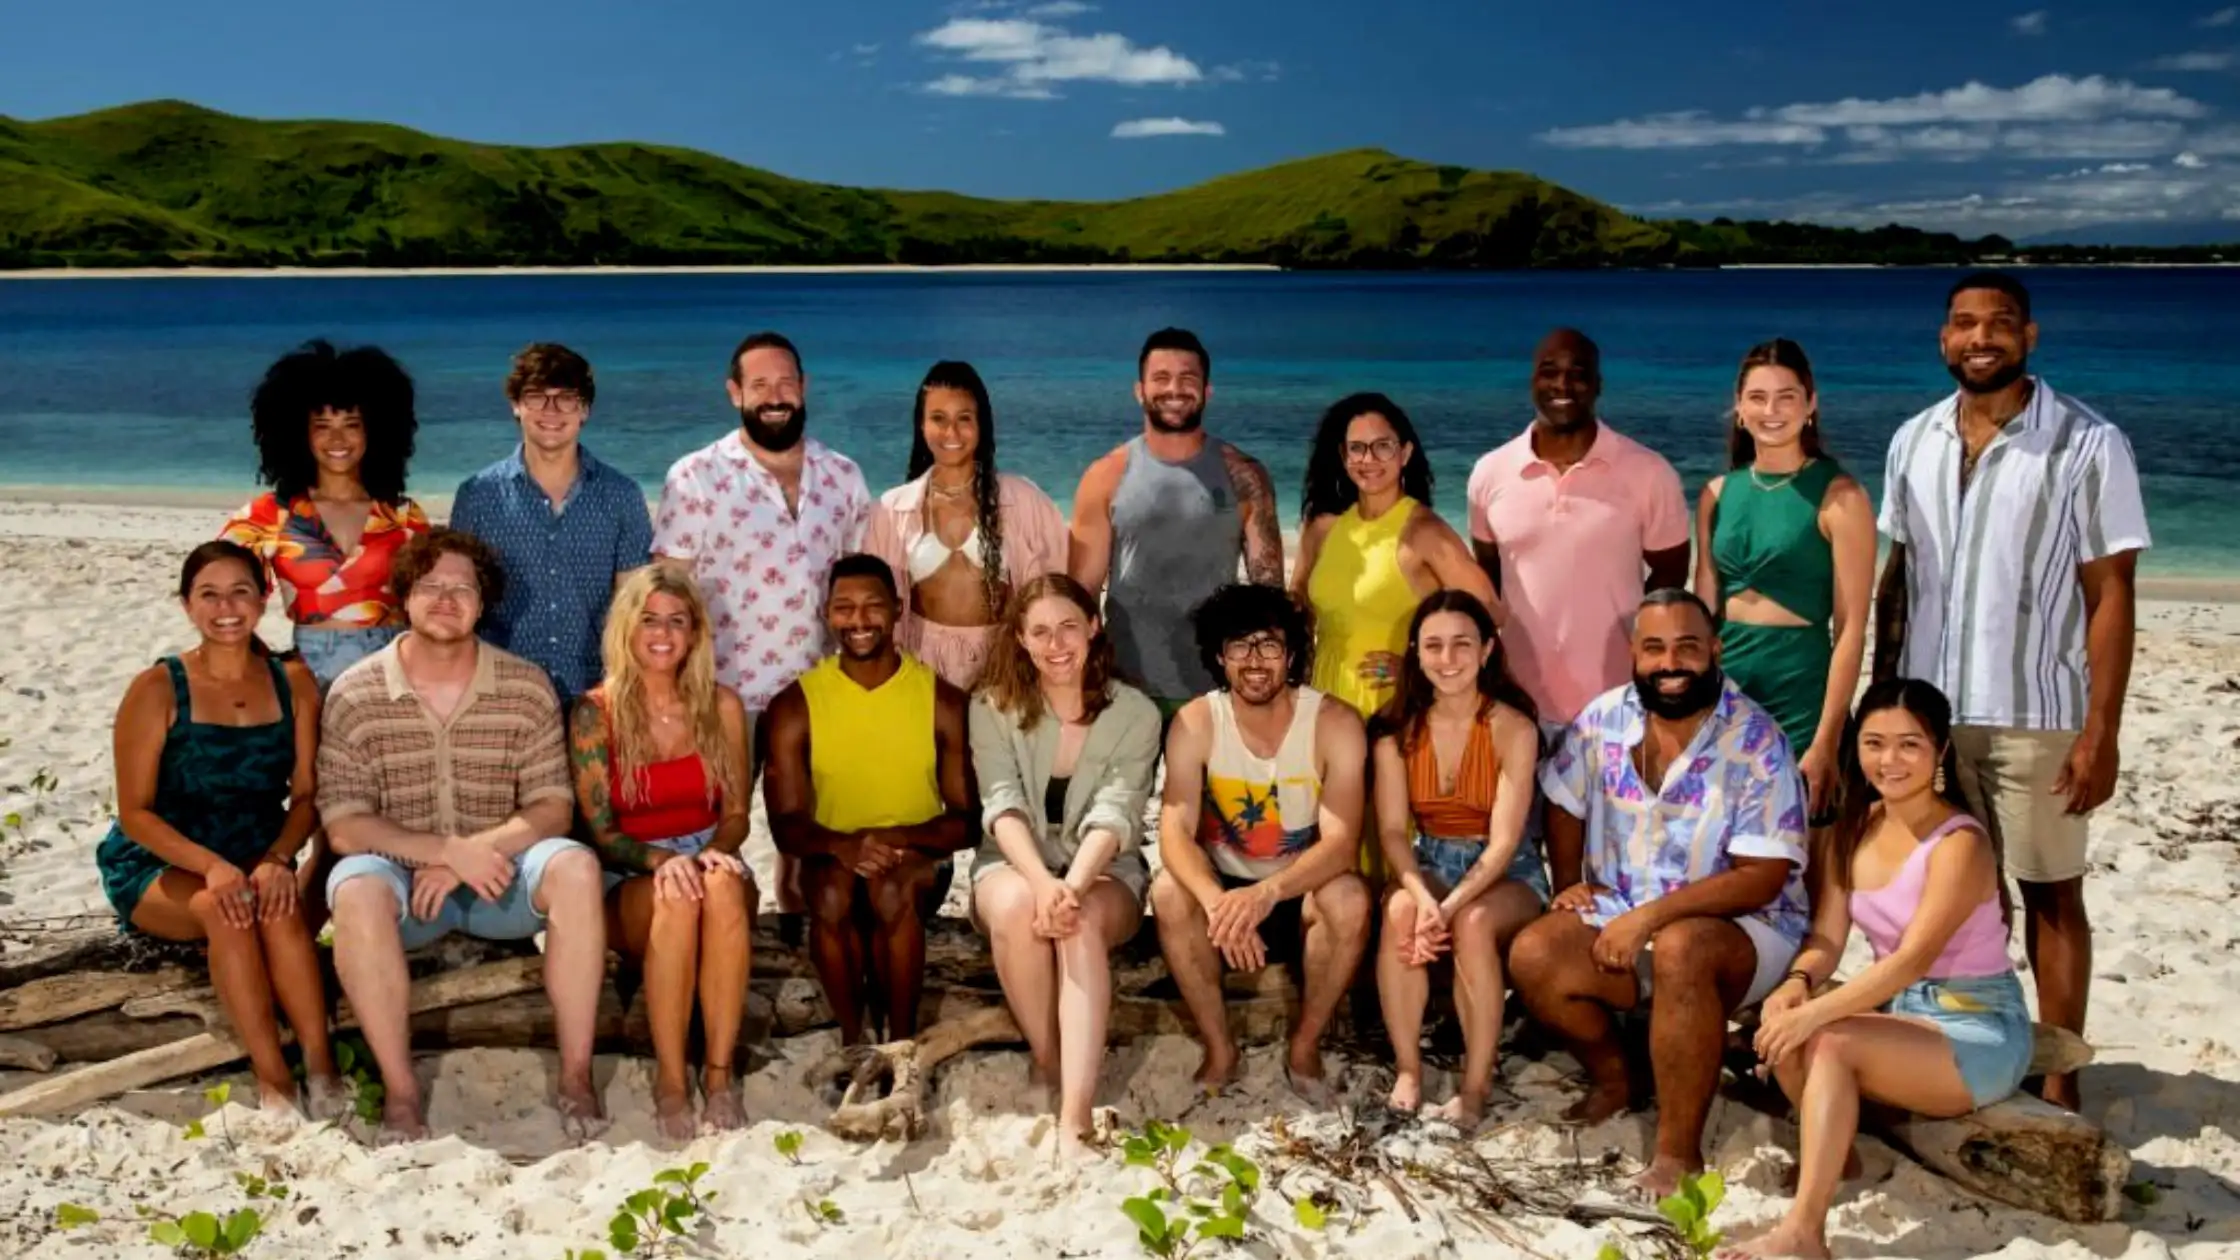 Survivor 44 Cast Here Are 18 Contestants Who Will Compete For $1 Million In Fiji